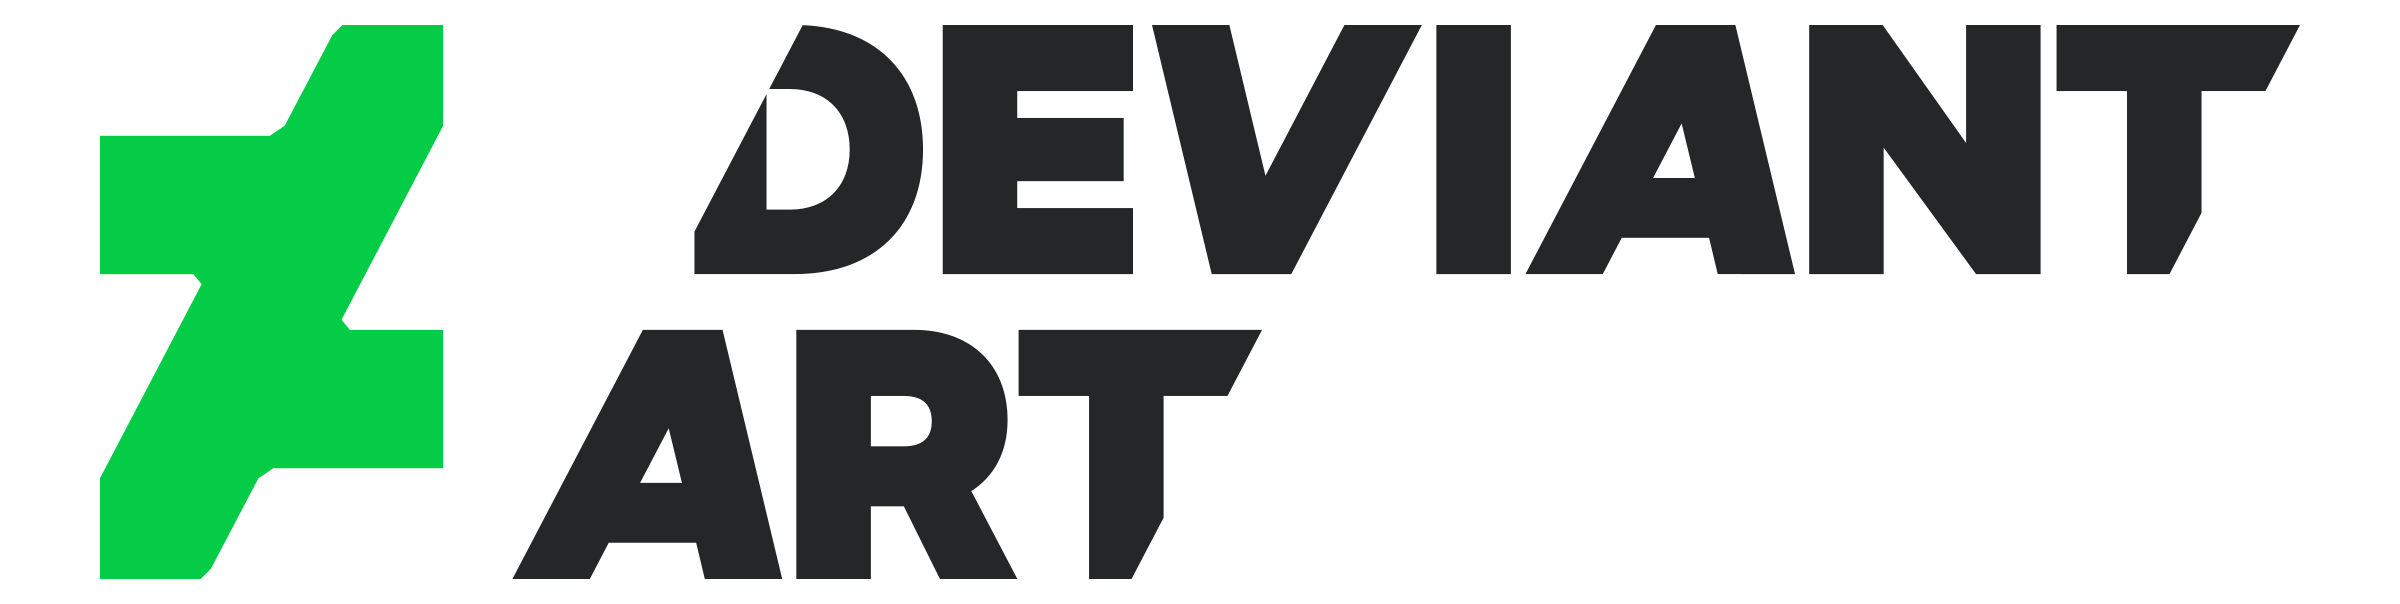 deviantART Logo - DeviantArt Logo PNG Transparent & SVG Vector - Freebie Supply